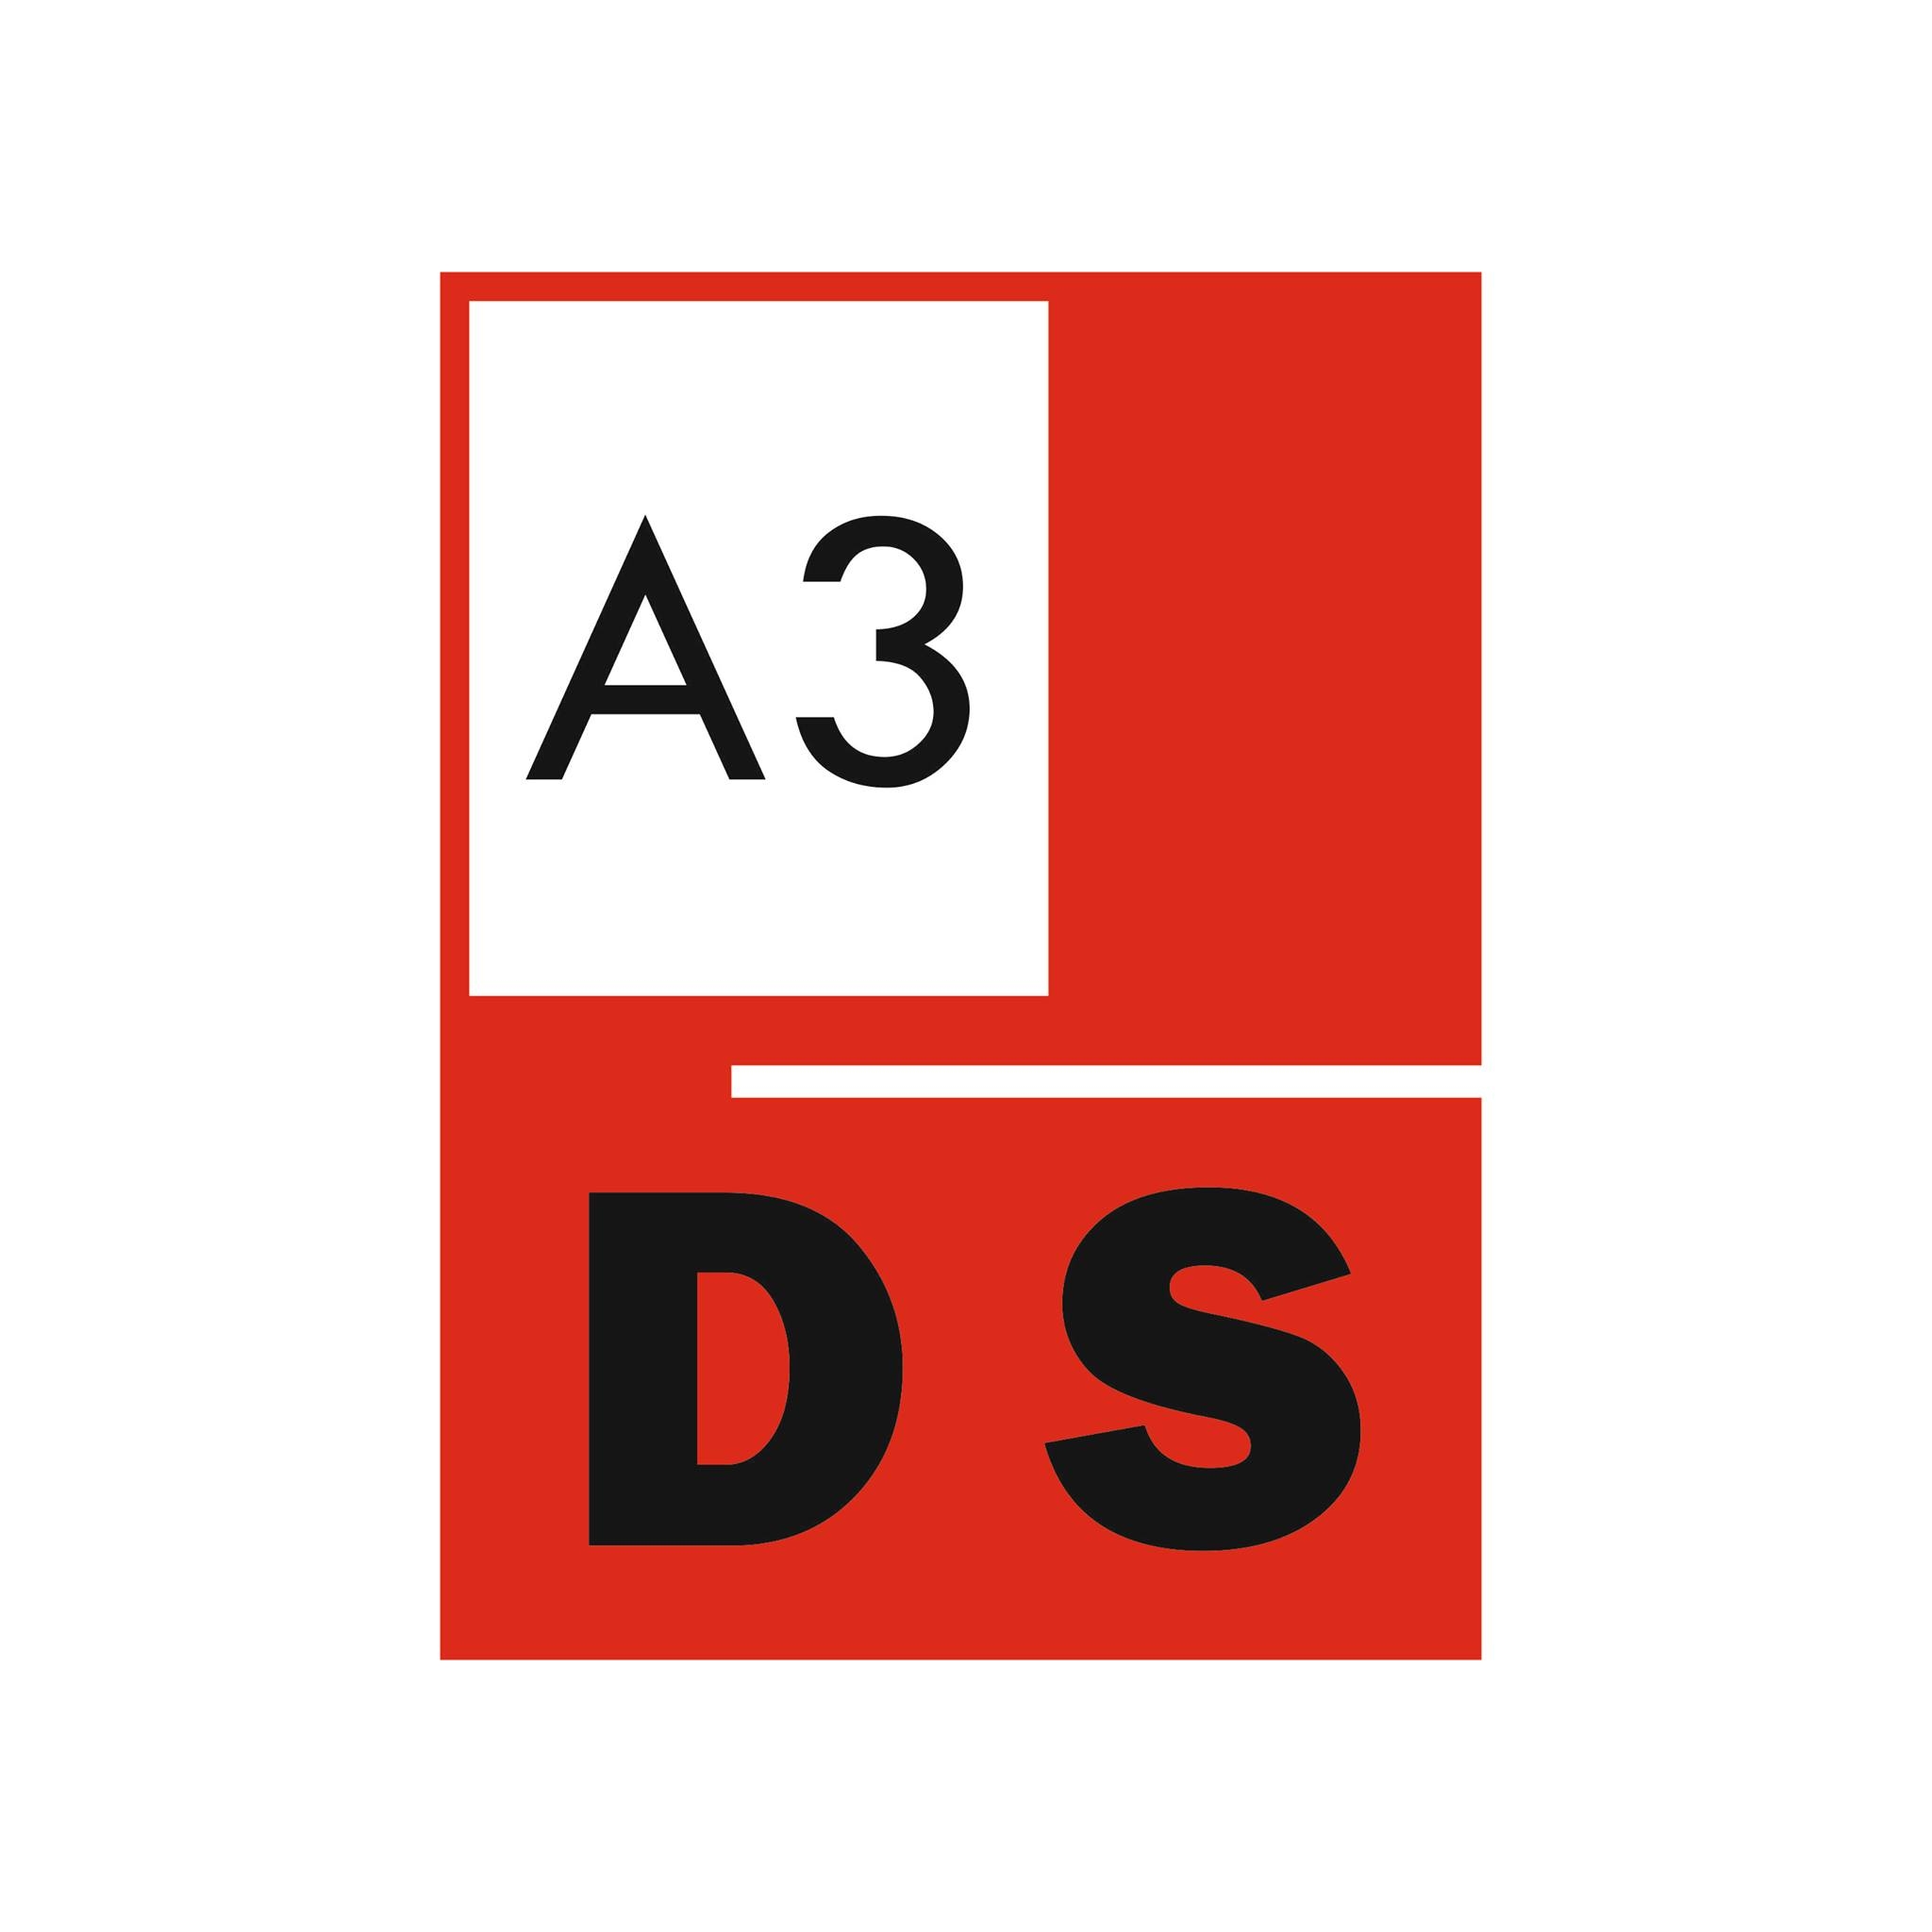 a3 design studio|Legal Services|Professional Services